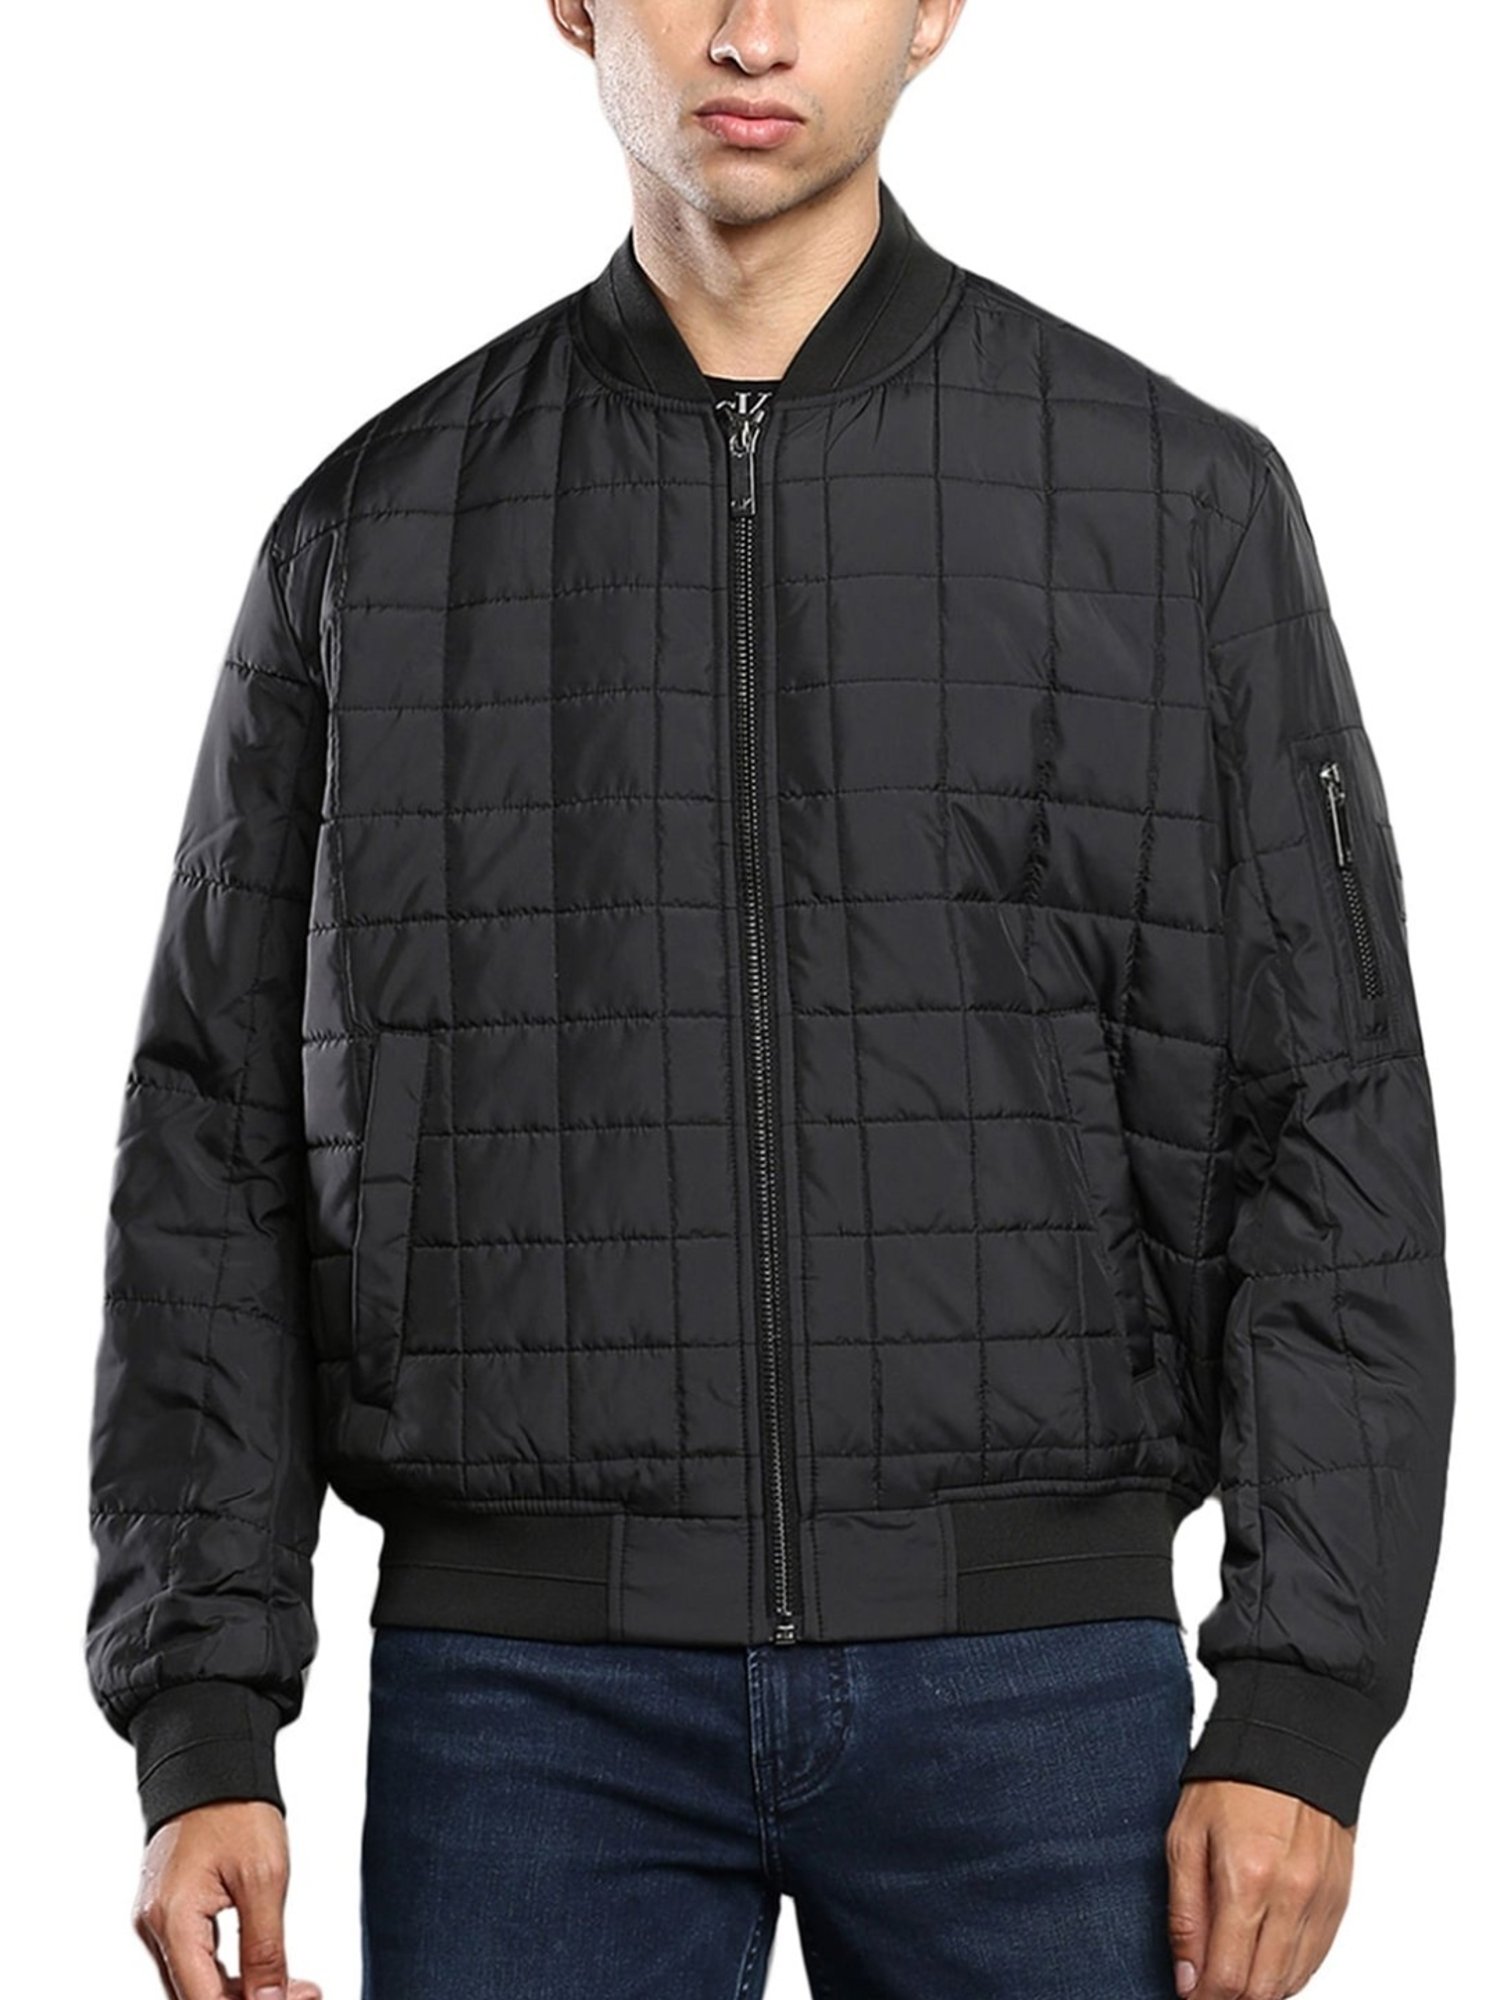 Quilted bomber jacket - Black - Men | H&M IN